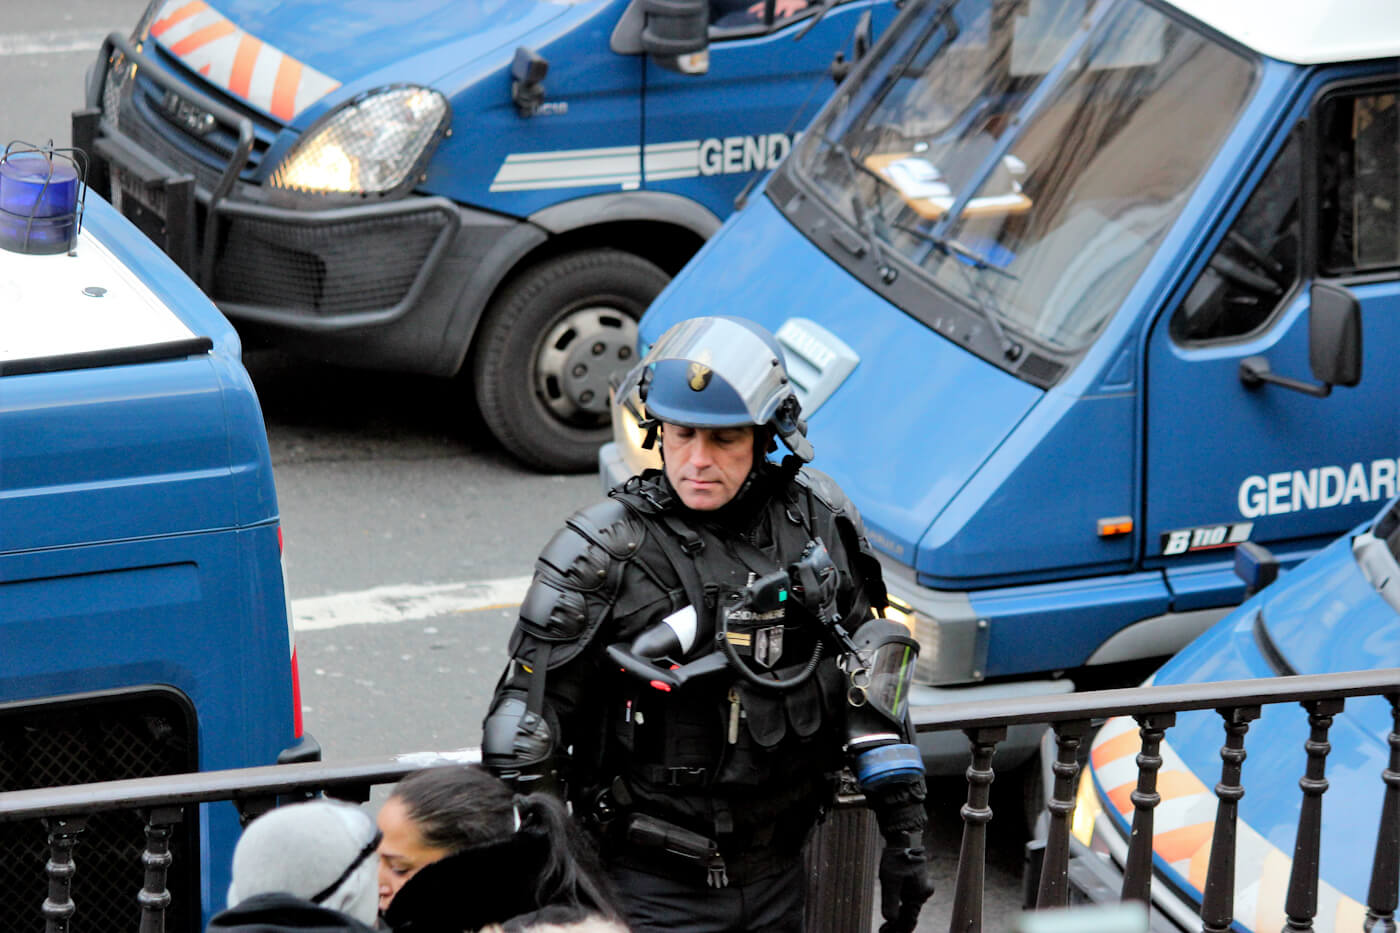 Yellow Vest | Riot Police